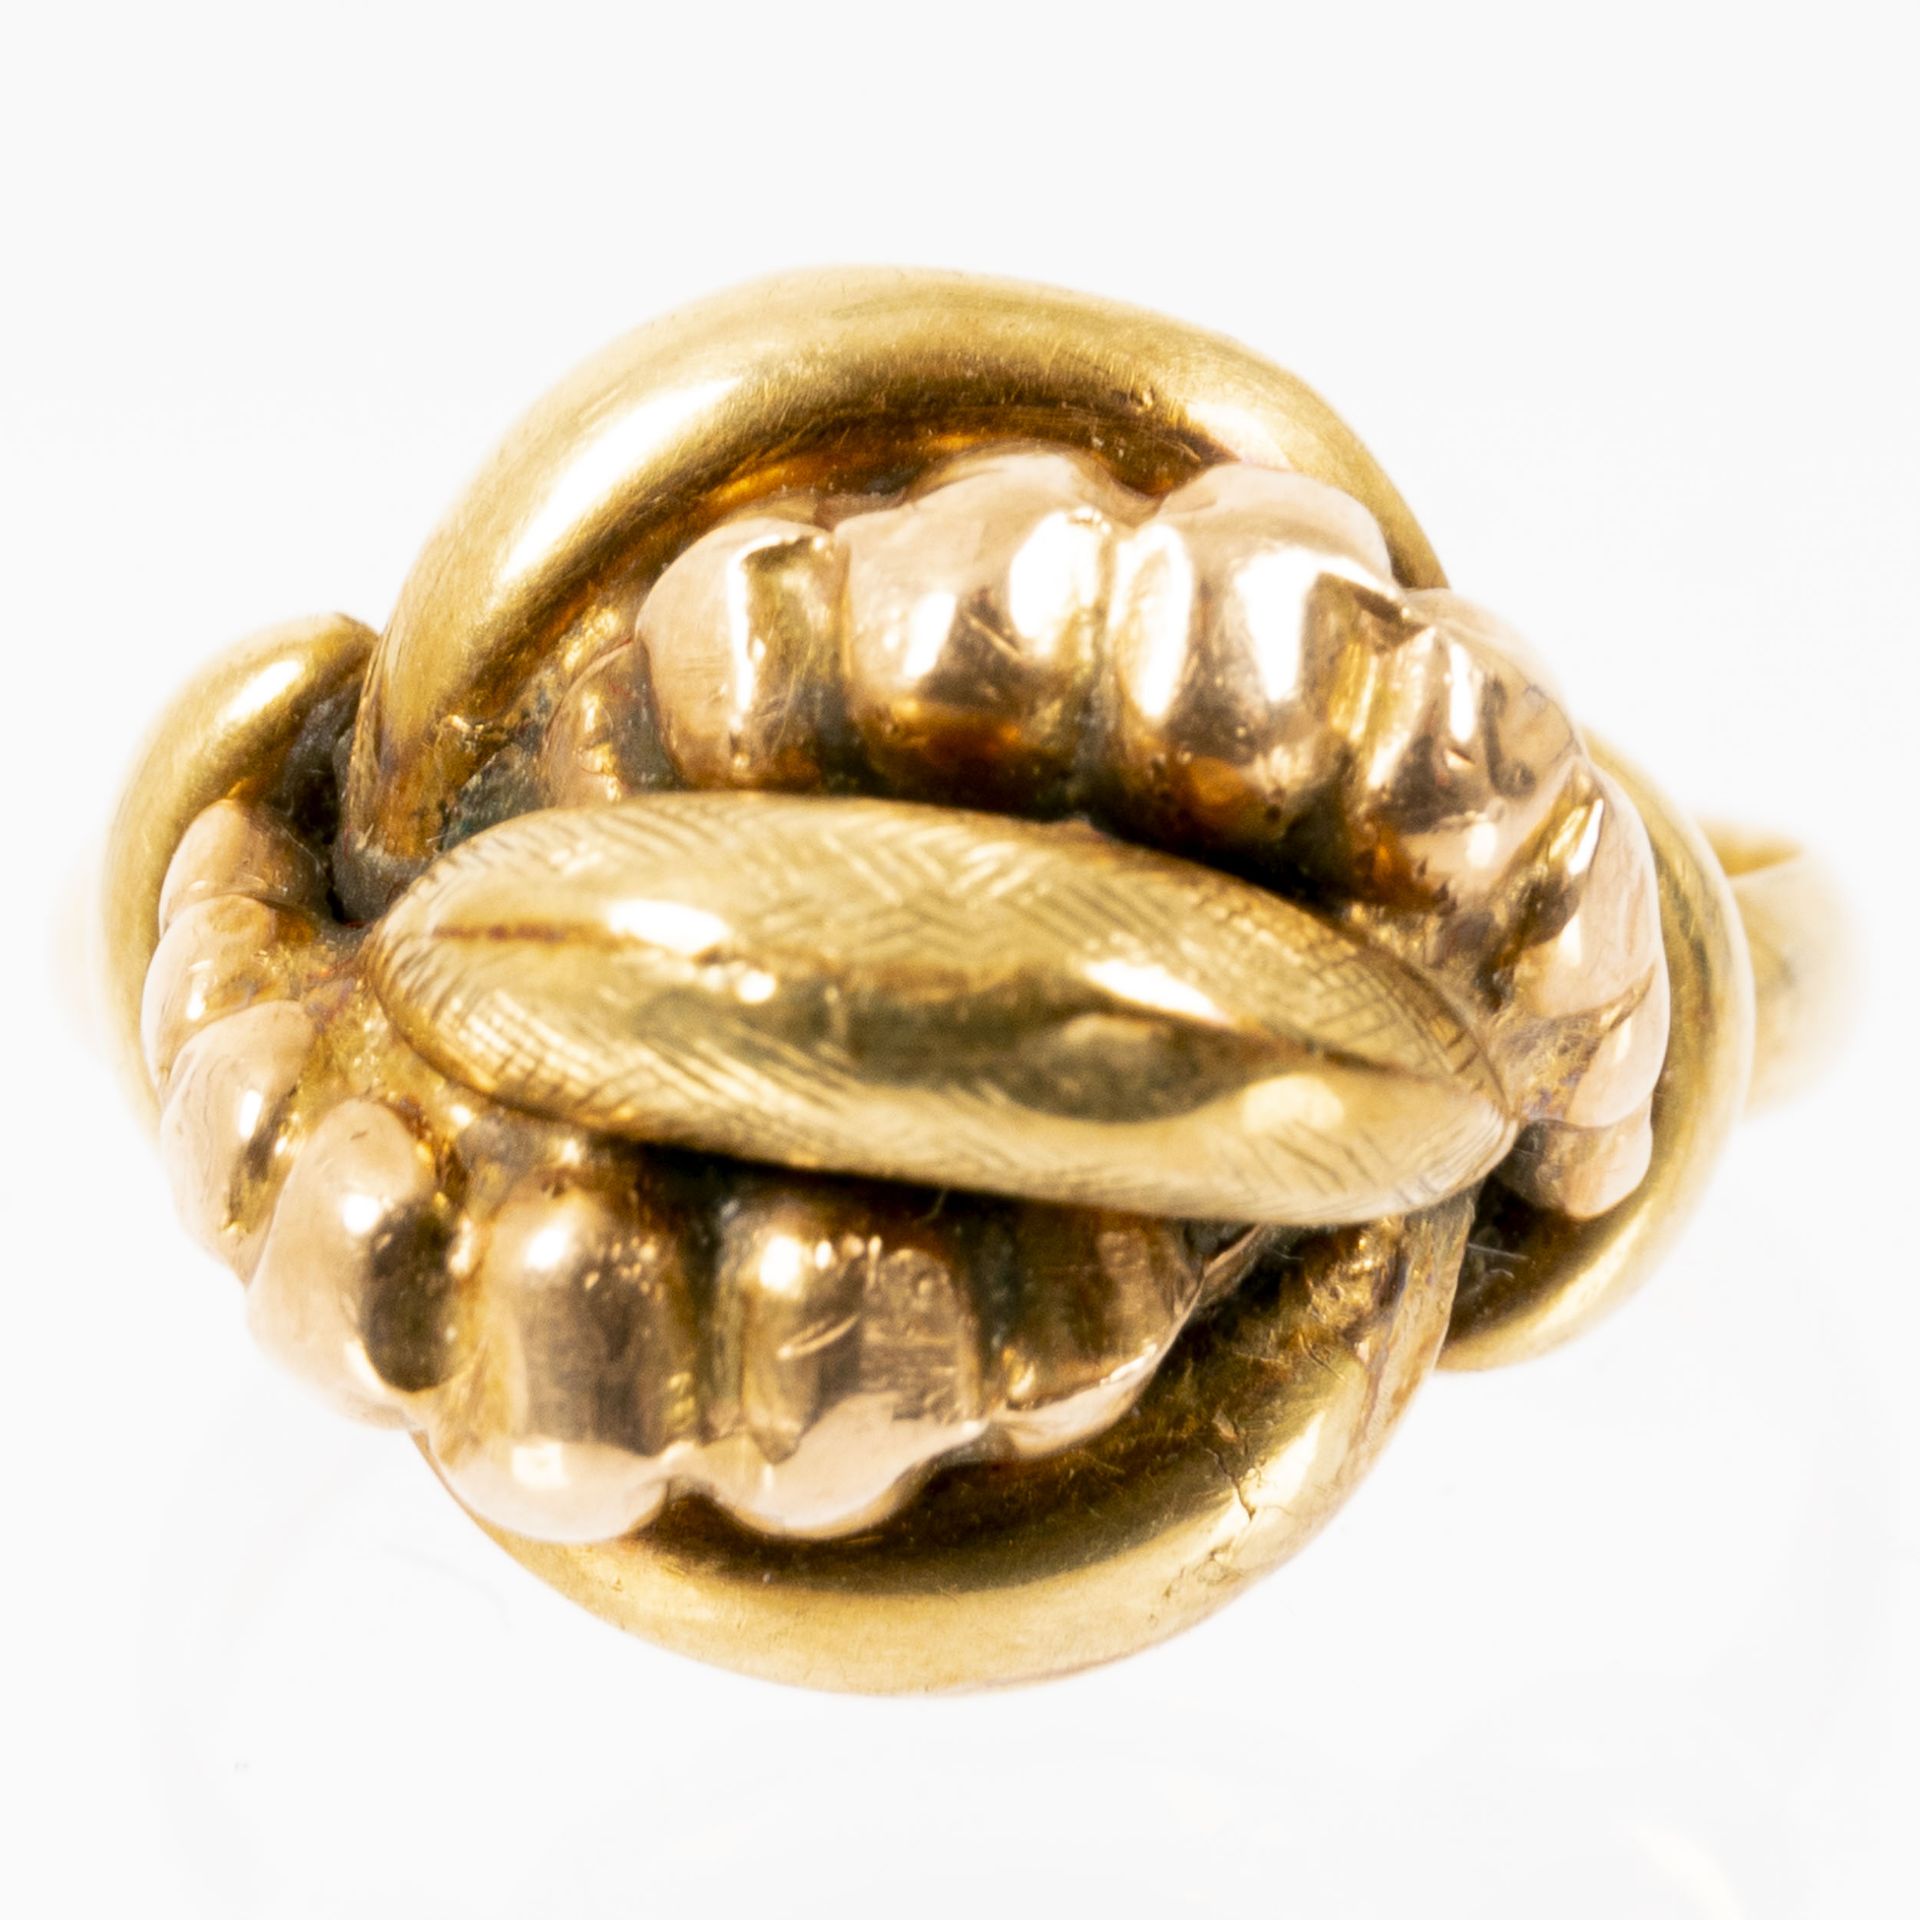 Alter 585er Gelbgold-Ring, an einen "Dutt" erinnernd, Innendurchmesser ca. 17 mm, ca. 5 gr. - Bild 2 aus 5